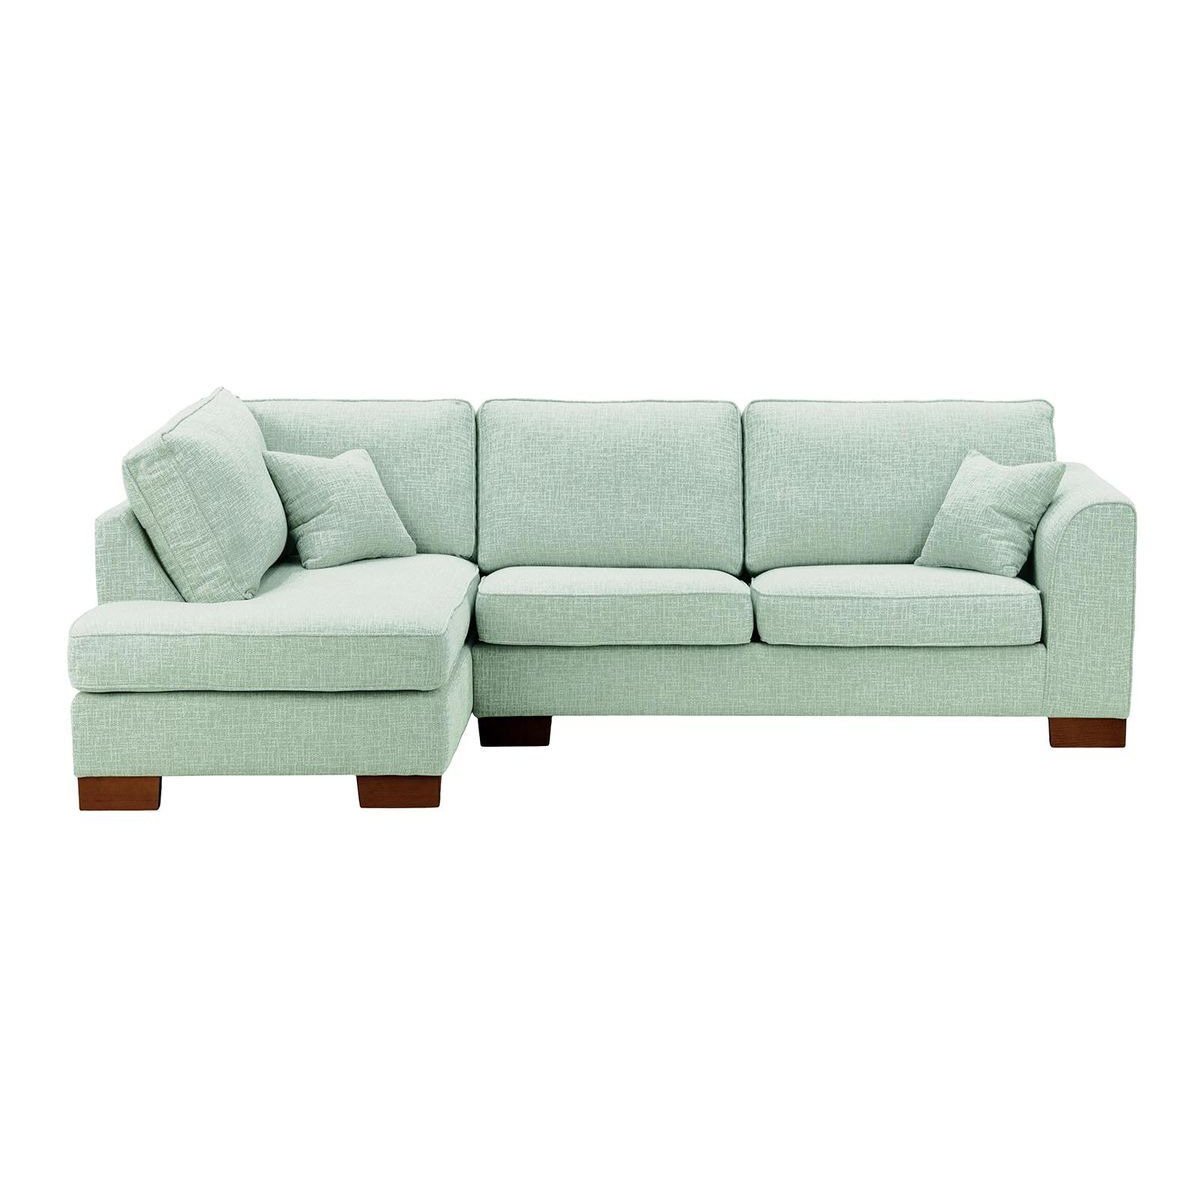 Avos Large Left Hand Corner Sofa, lilac, Leg colour: white - image 1